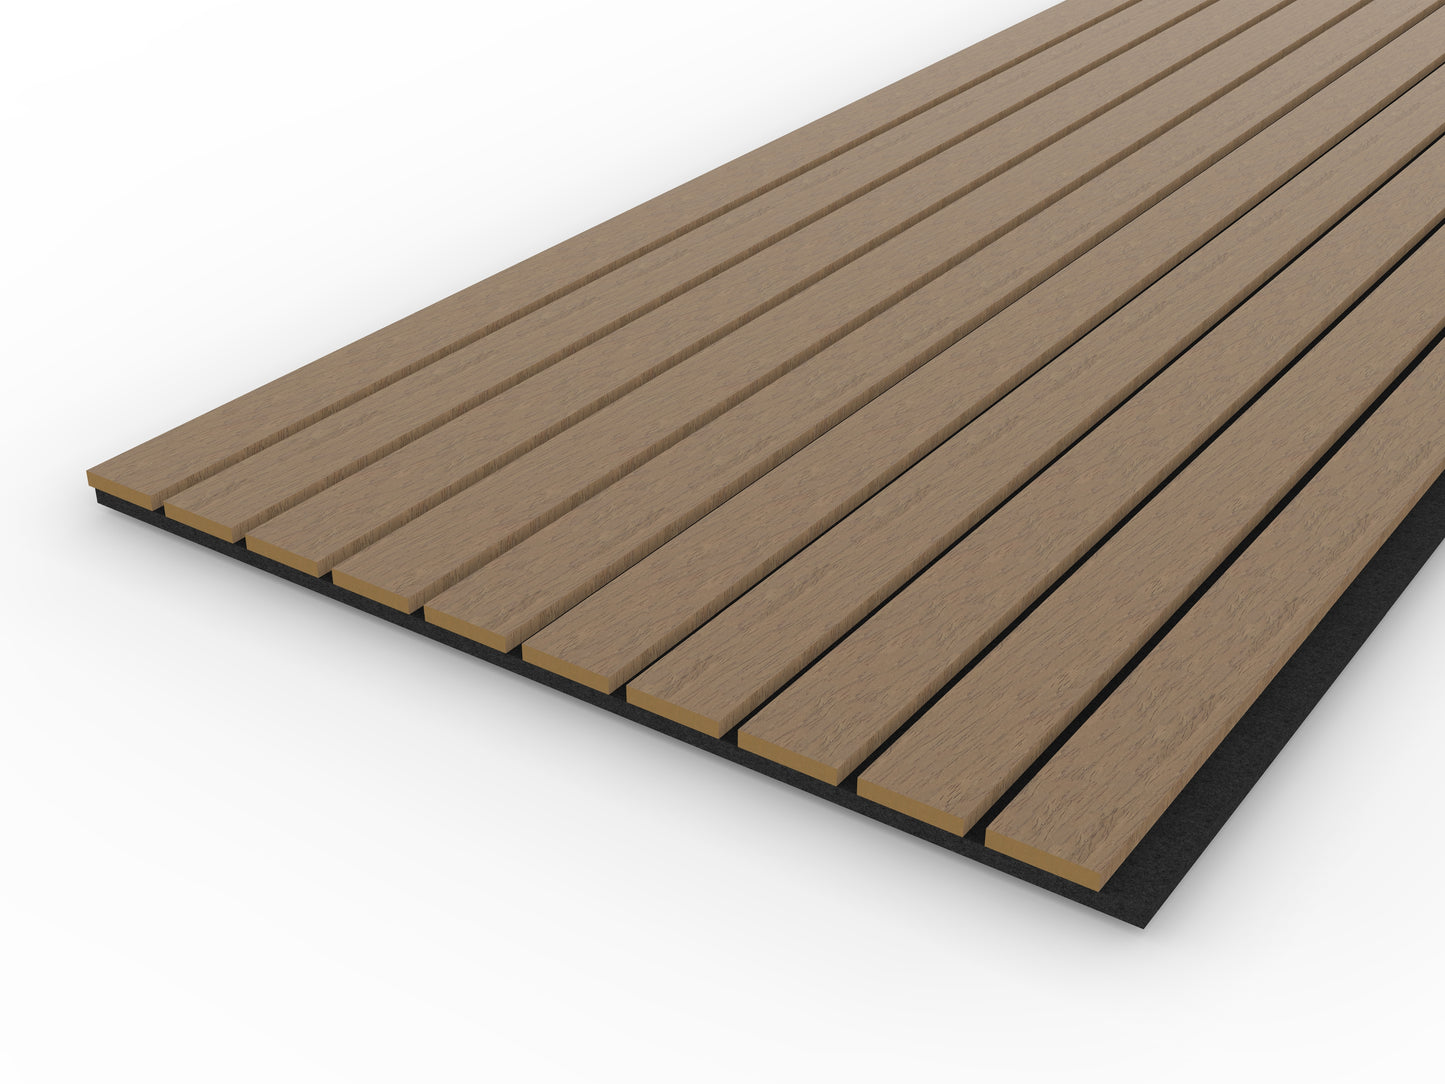 Smoked Oak Acoustic Wood Wall Panel Wide Slat Series 2 Sample